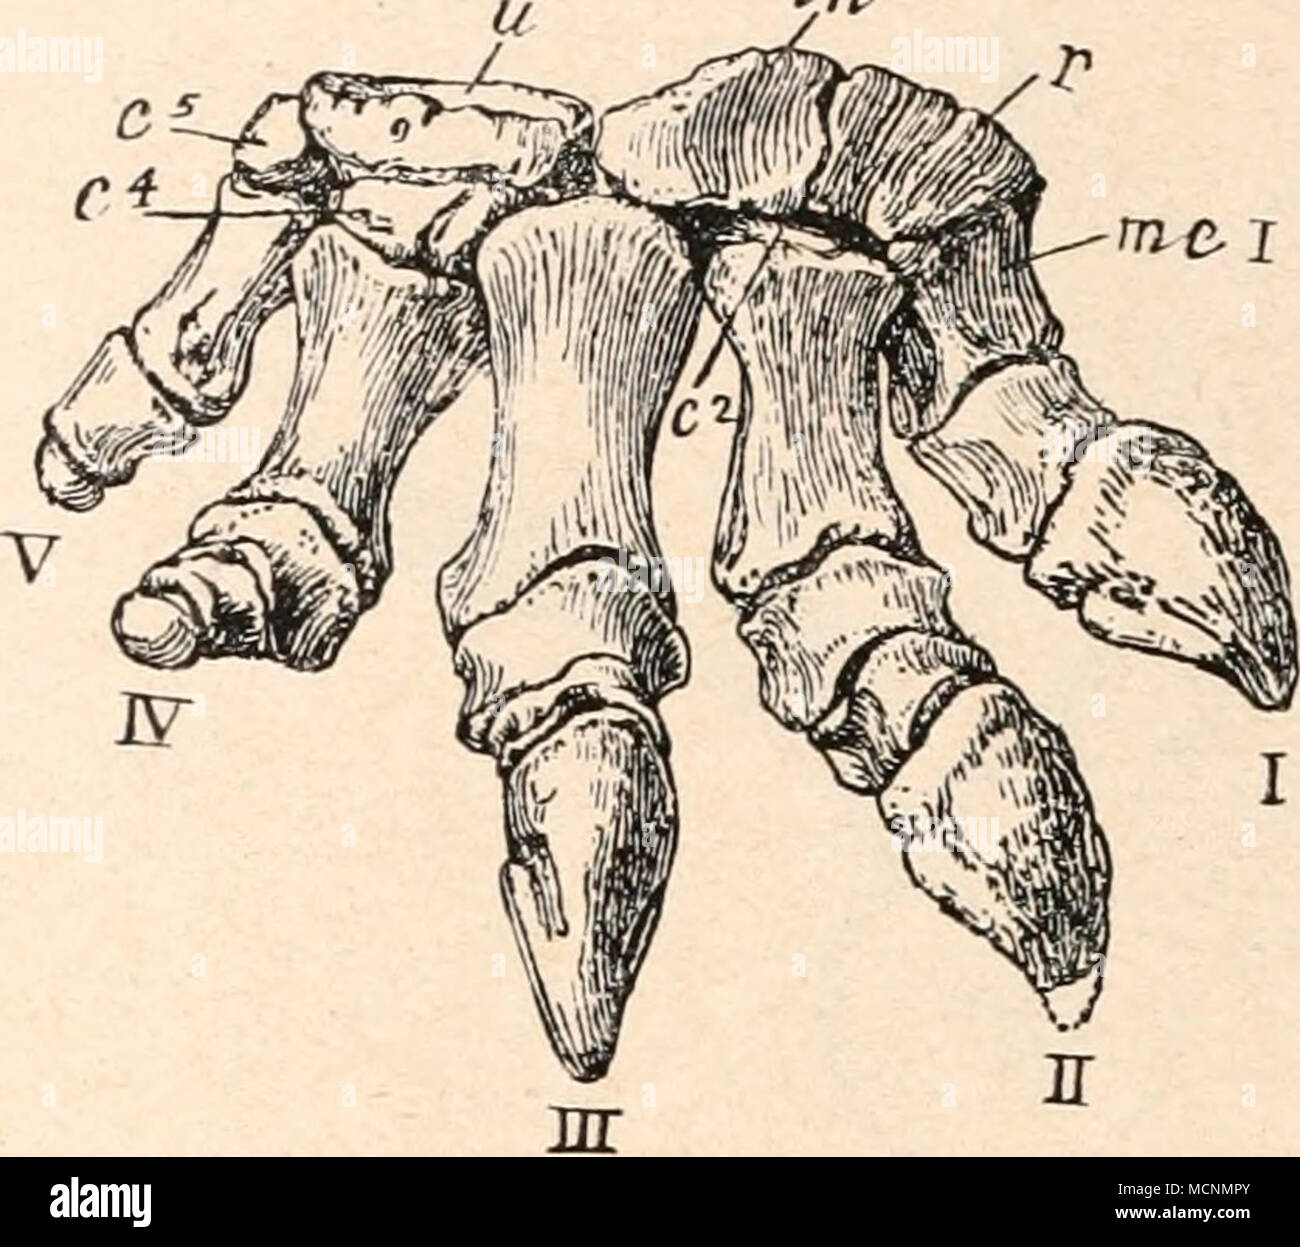 . Fig. 488. Rechter Vorderfuß von Camptosaurus dispar Marsh aus dem obersten Jura von Wyoming, 1/i nat. Gr. (Nach Ch. W. Gilmore.) c2 = Carpale II. c] = Carpale IV. = Carpale V. = Intermedium. = Radiale. = Ulnare. = Metacarpale I. I—V = I.—V. Finger. Die Ungualphalange des Daumens ist ergänzt. c5 in r n mc I Stock Photo